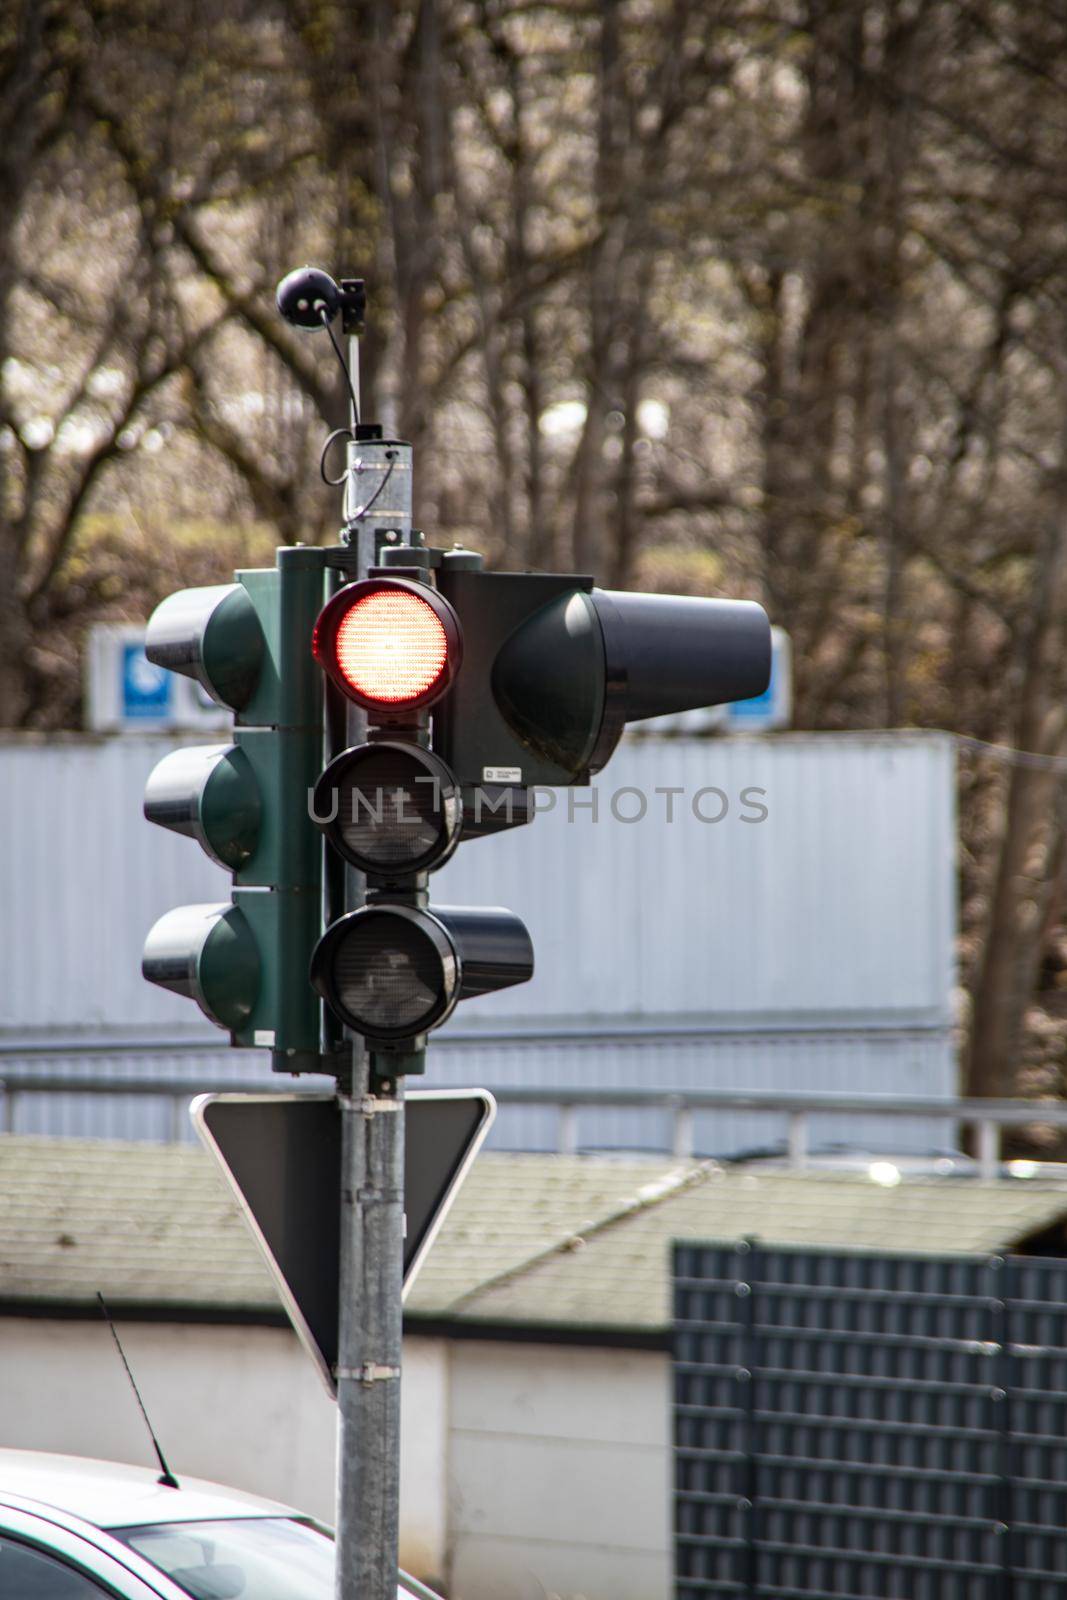 Traffic lights in road traffic by Dr-Lange